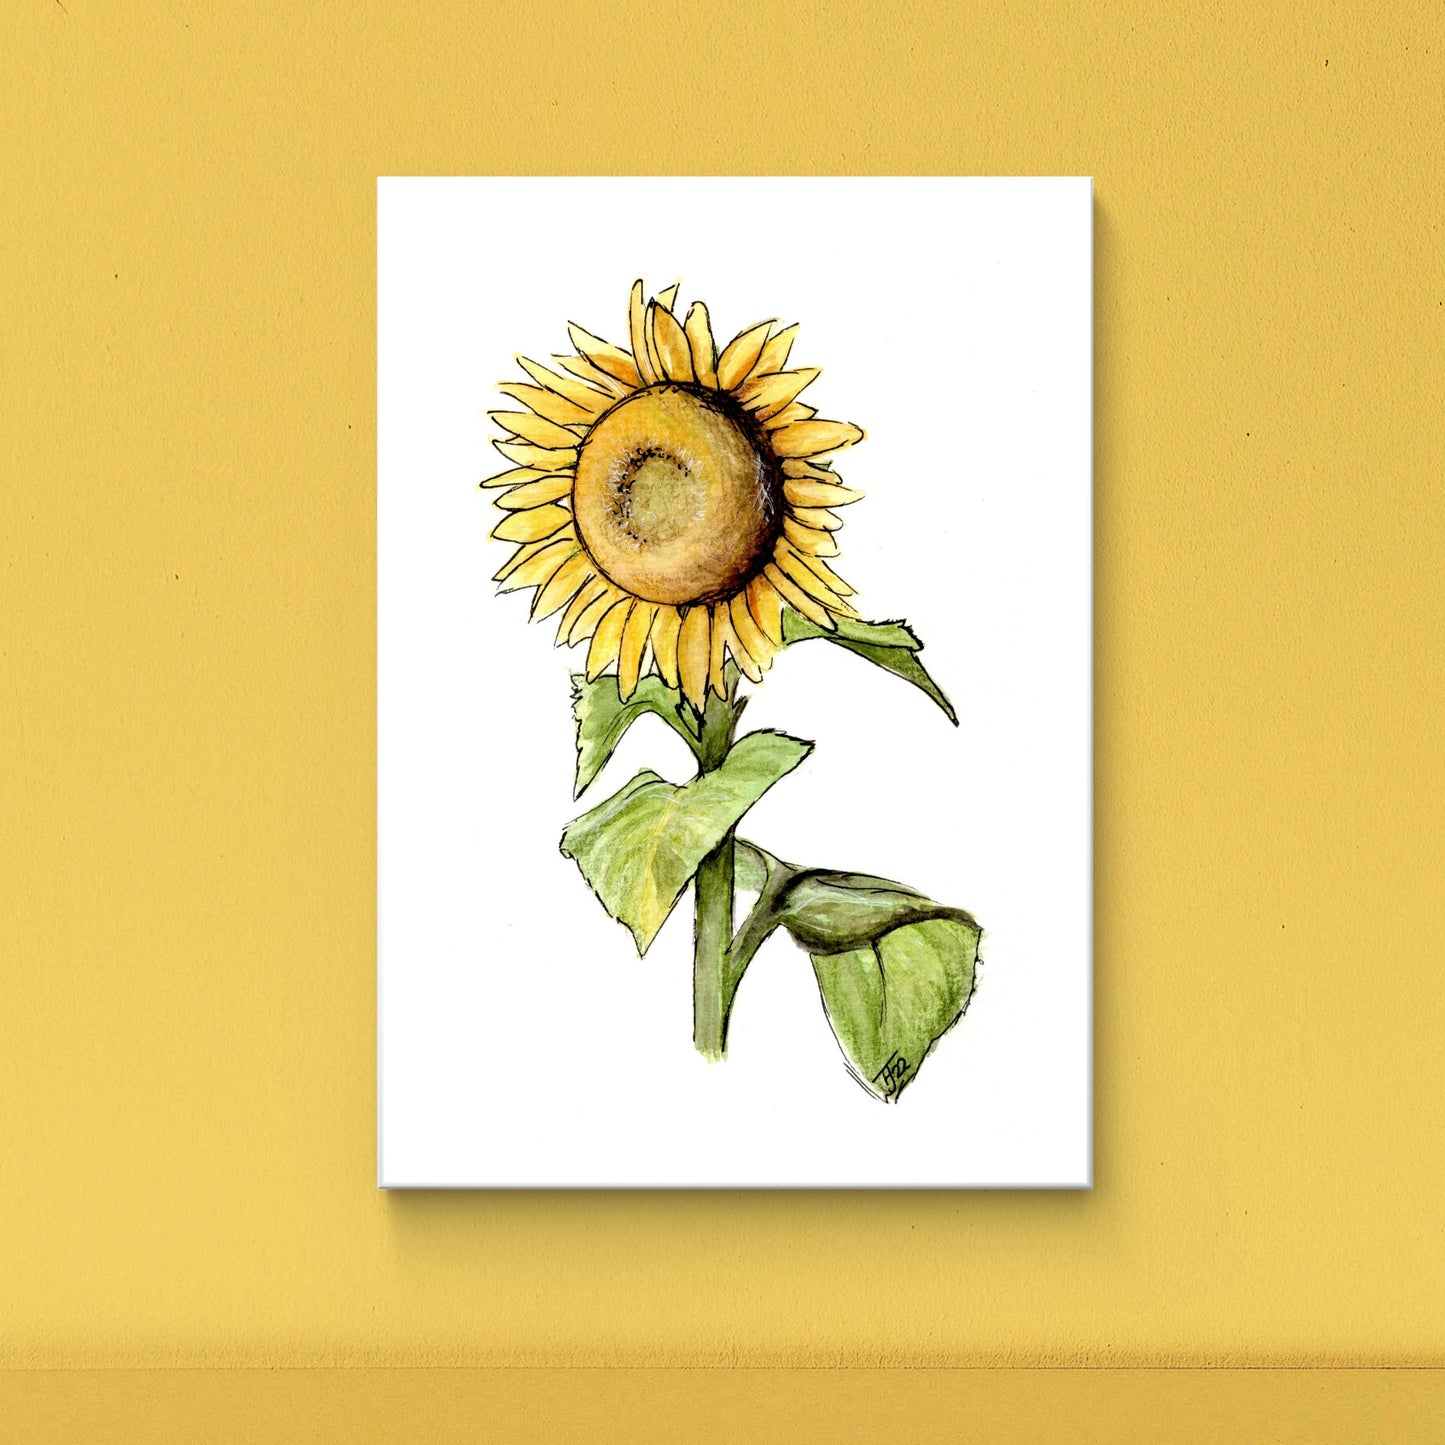 "Solidarity" Sunflower Watercolour Print